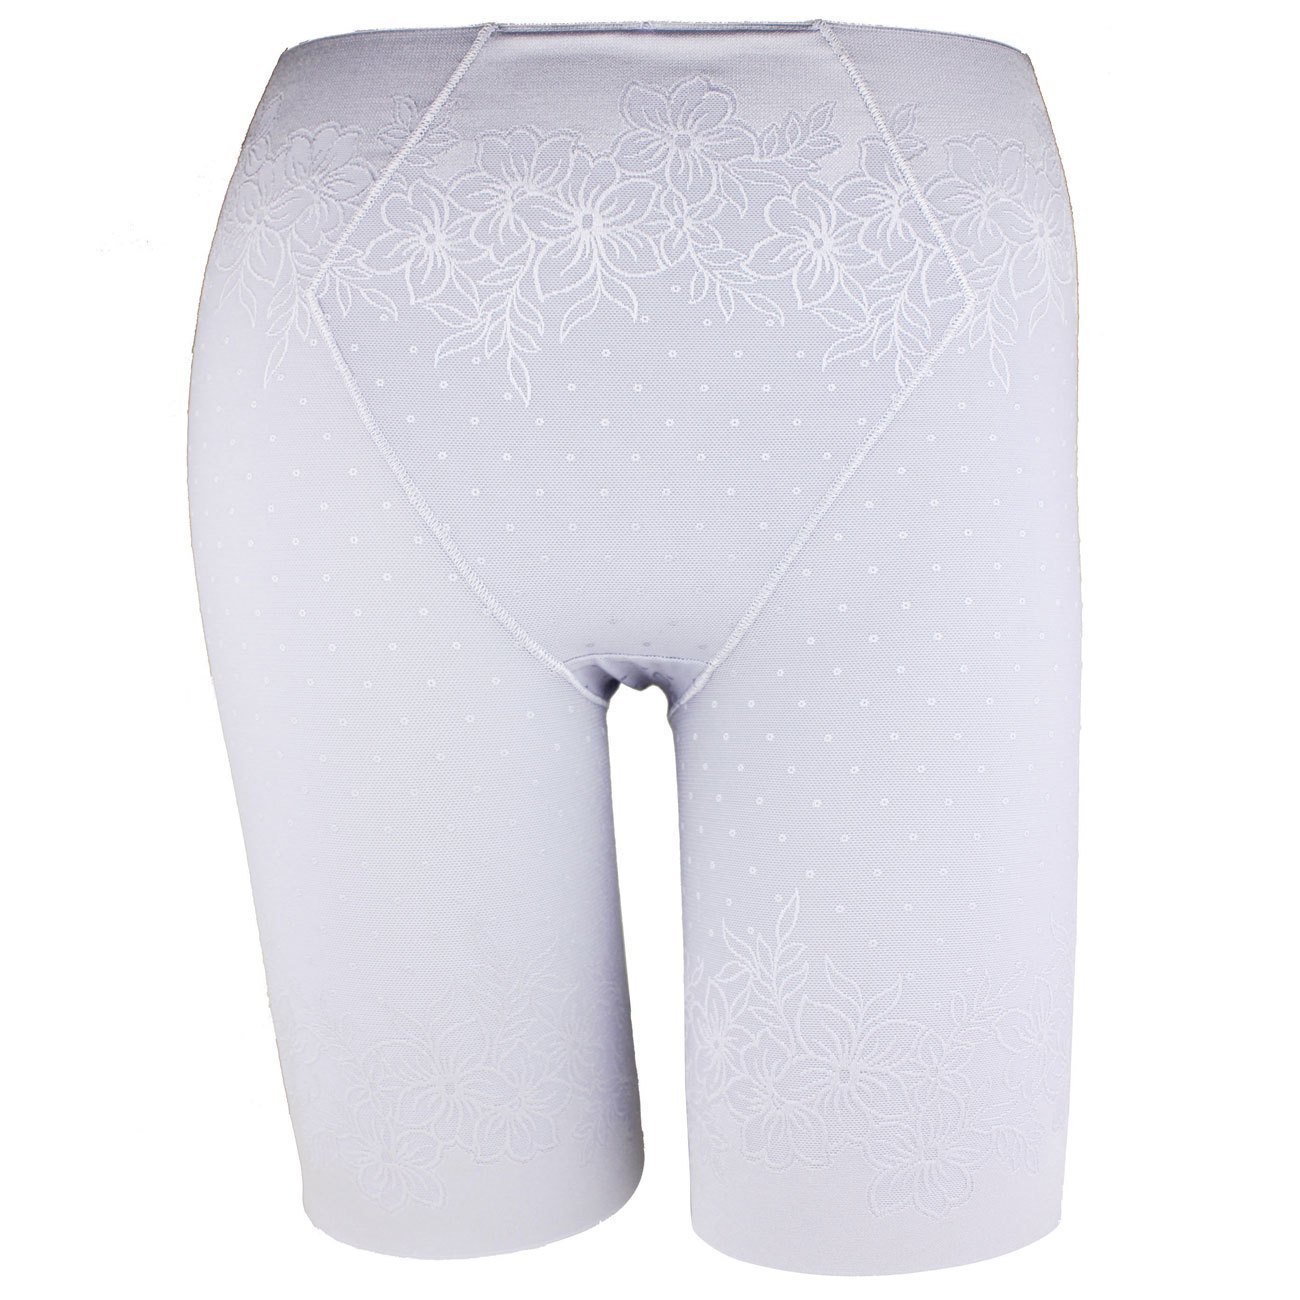 Embry seamless panties high waist plastic pants ep1753